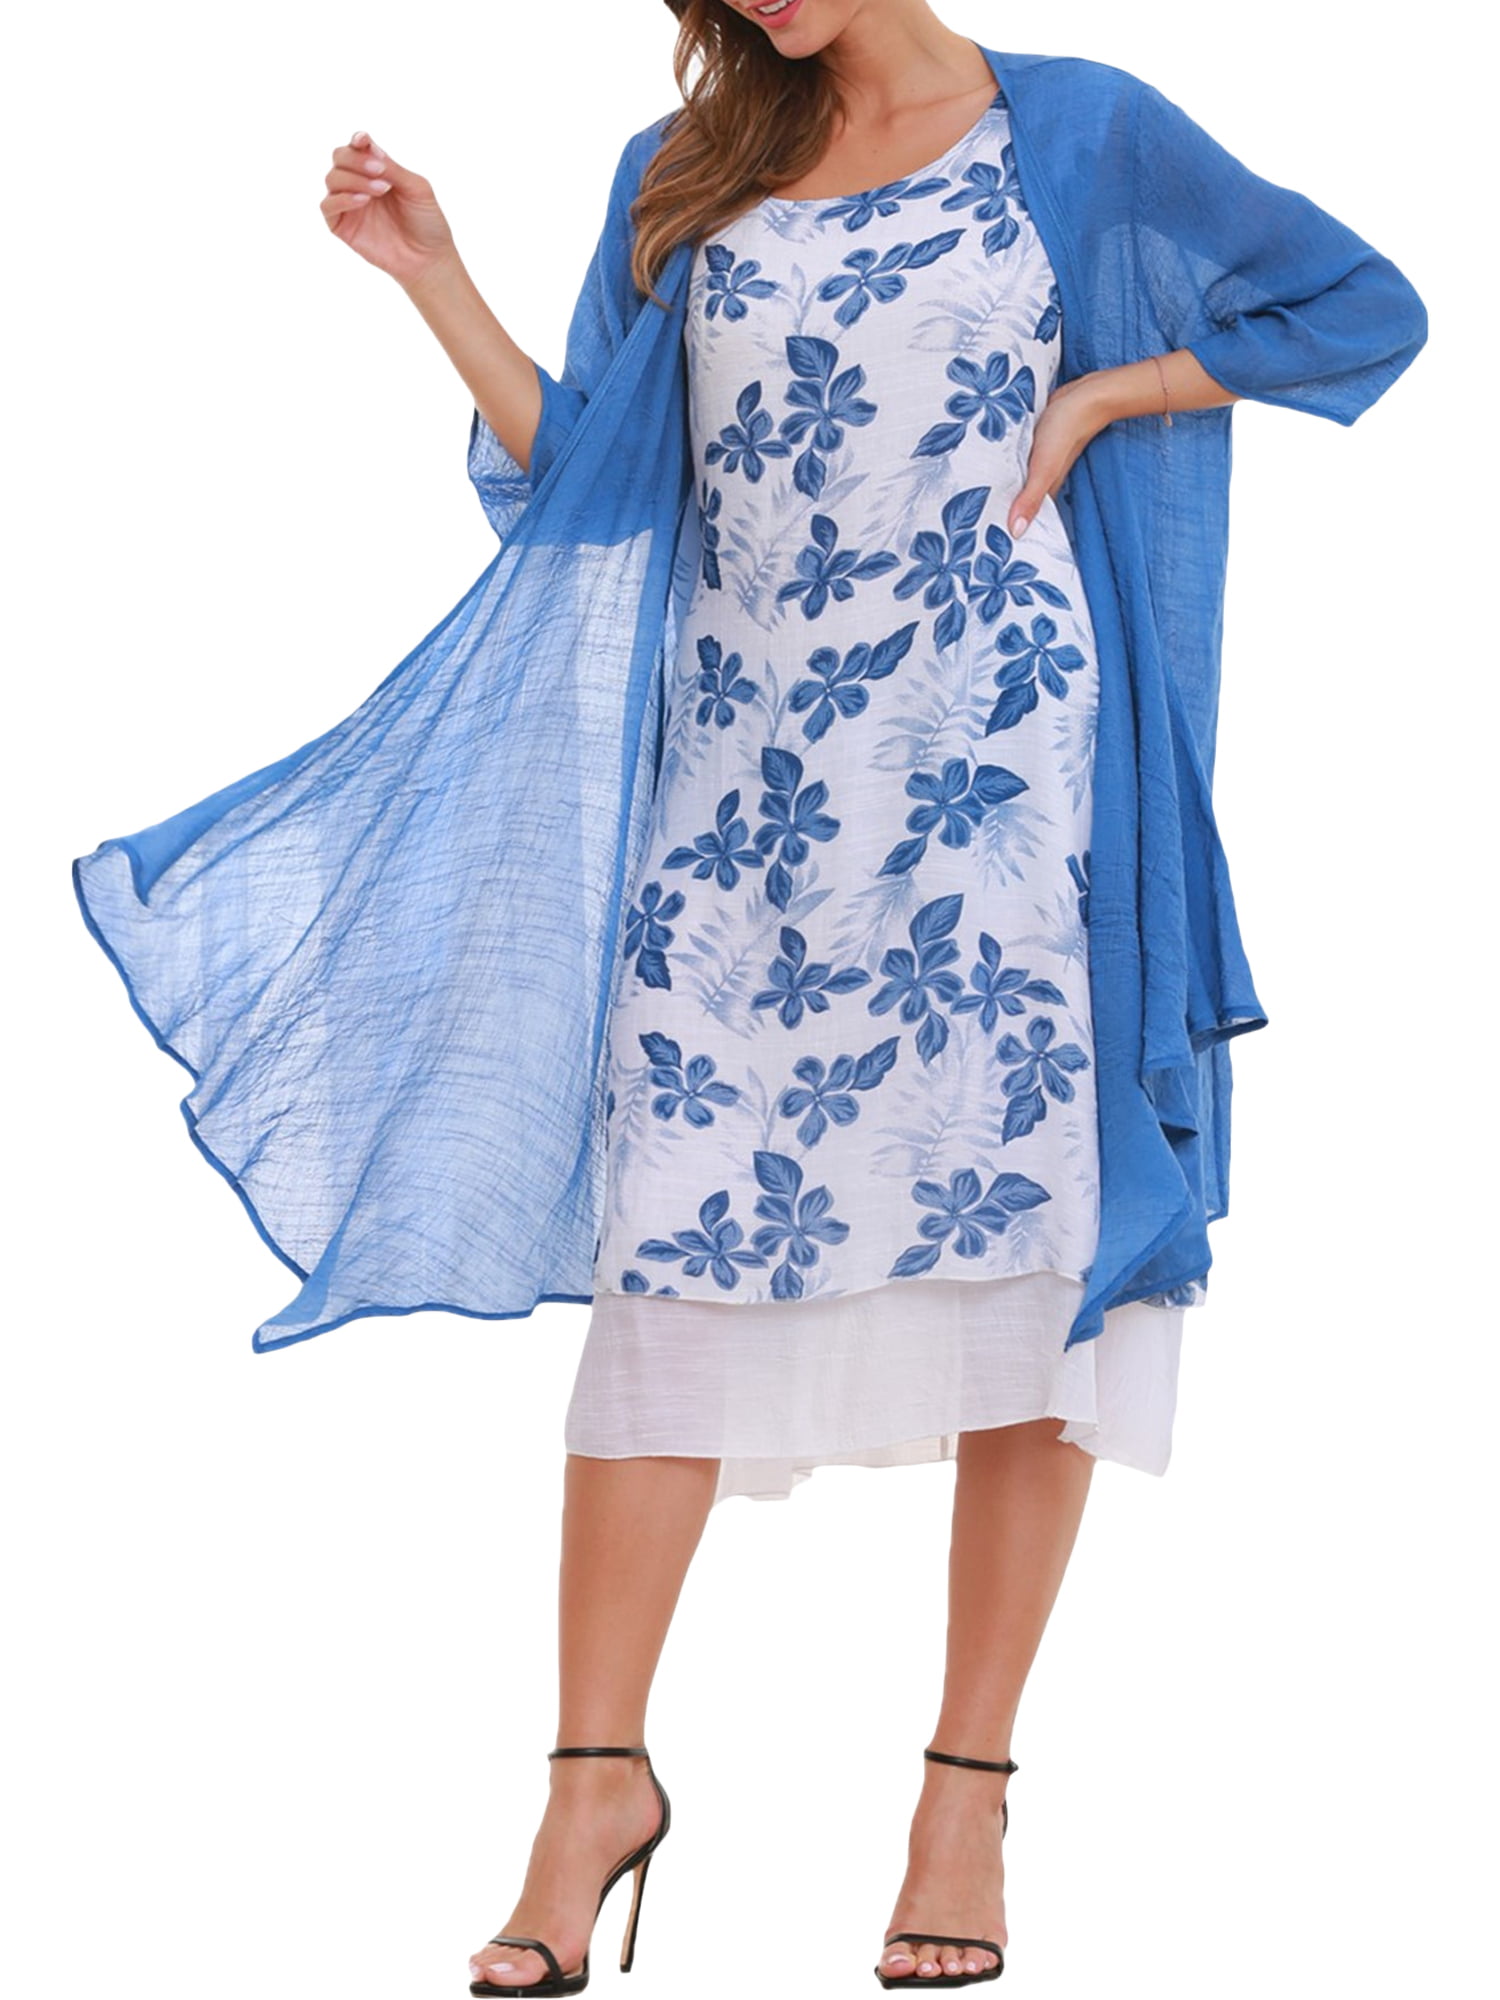 Simply Couture 2pc Set Dress with Kimono Jacket, Women's - Walmart.com